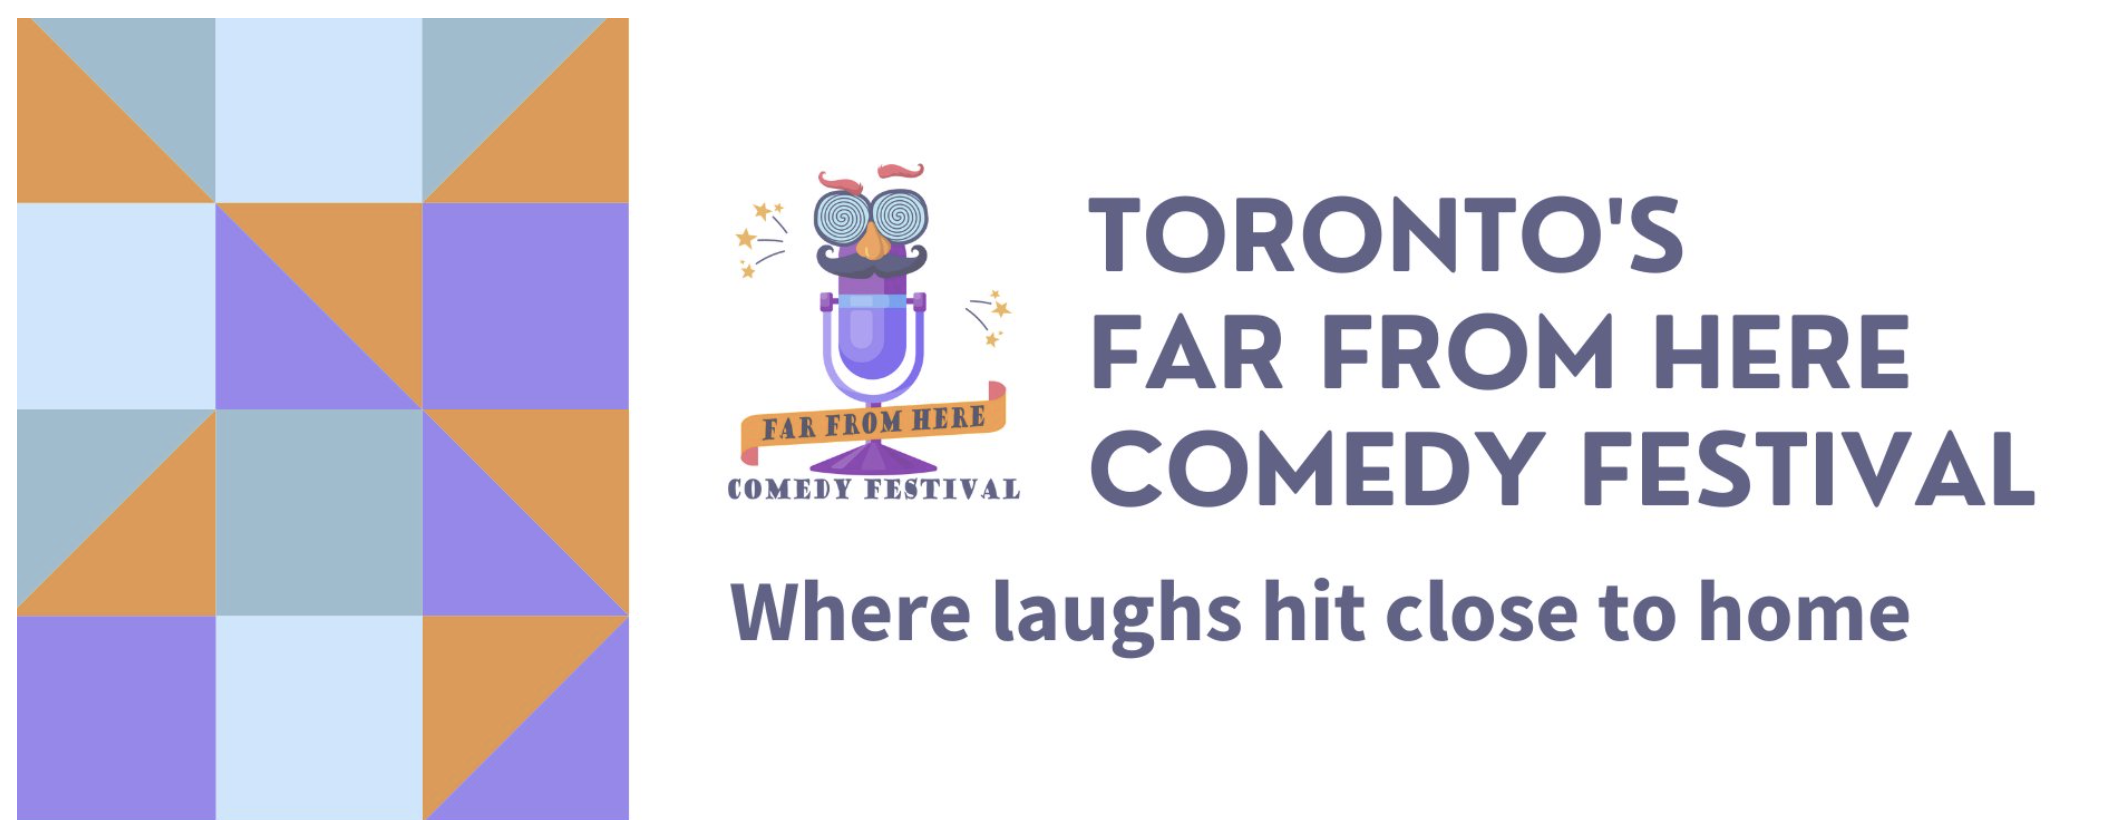 Far From Here Comedy Festival – Dec 9, 2022 @ 7pm